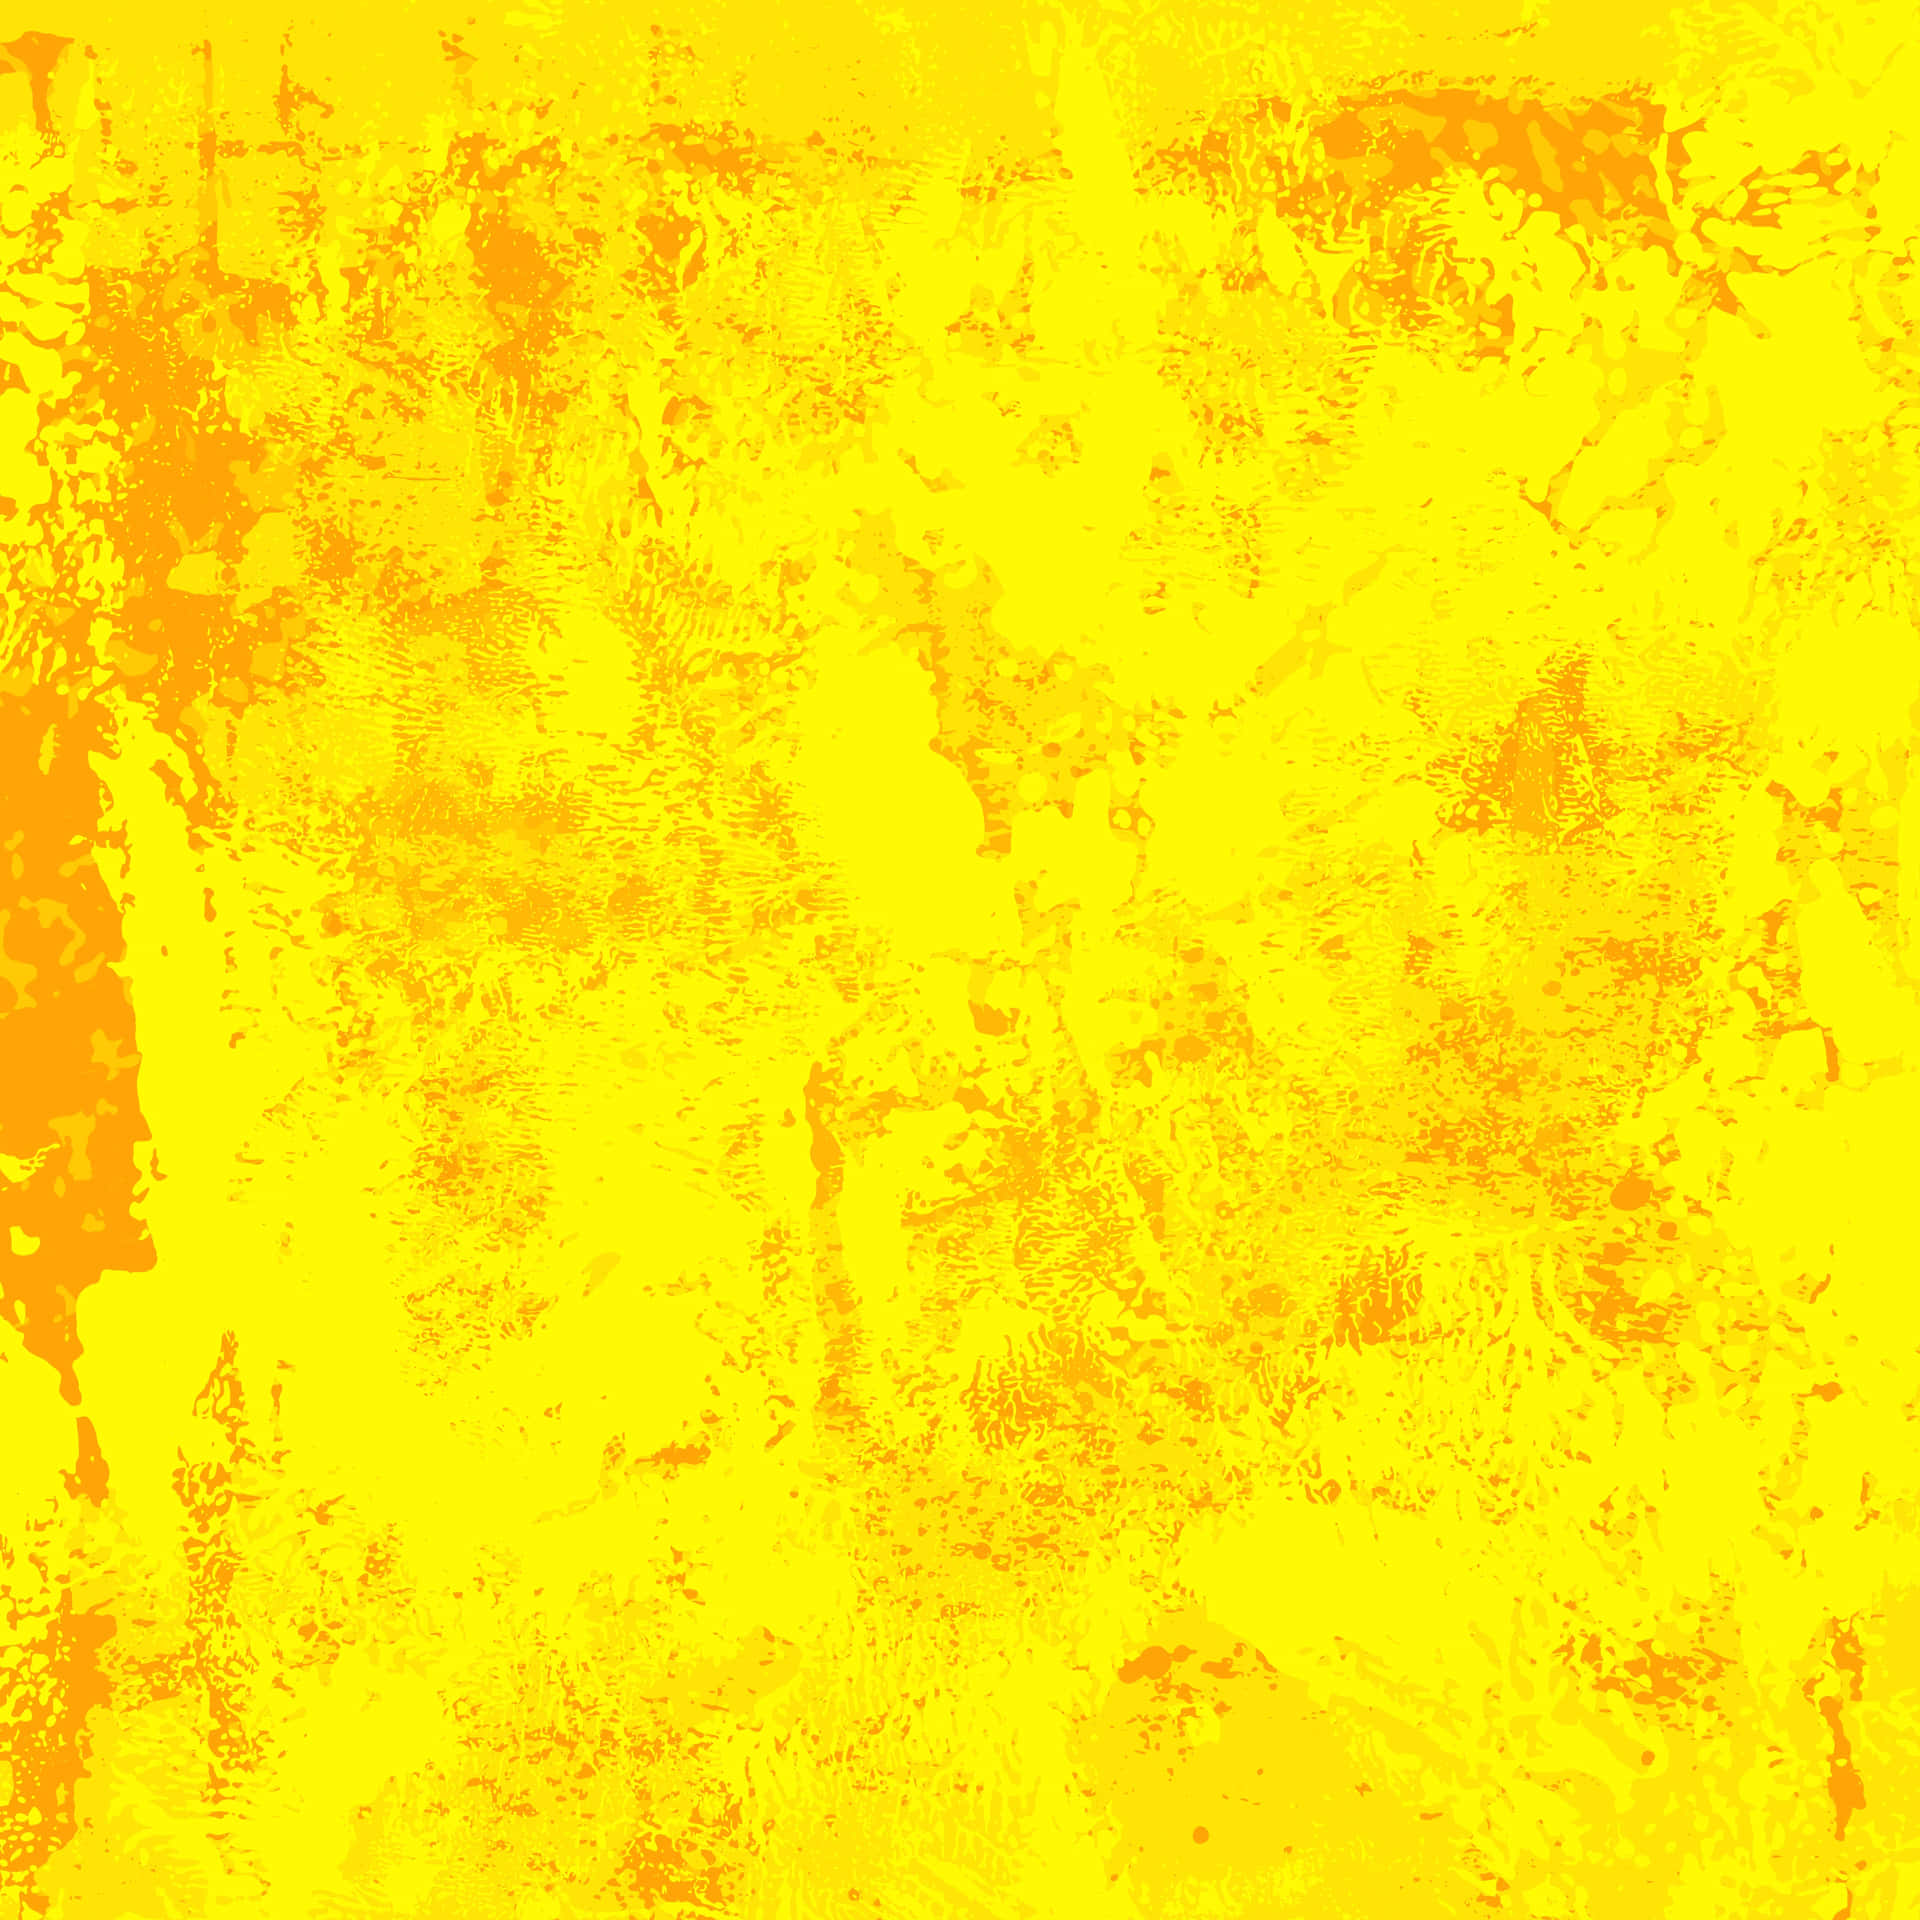 Vintage Yellow Grunge Background